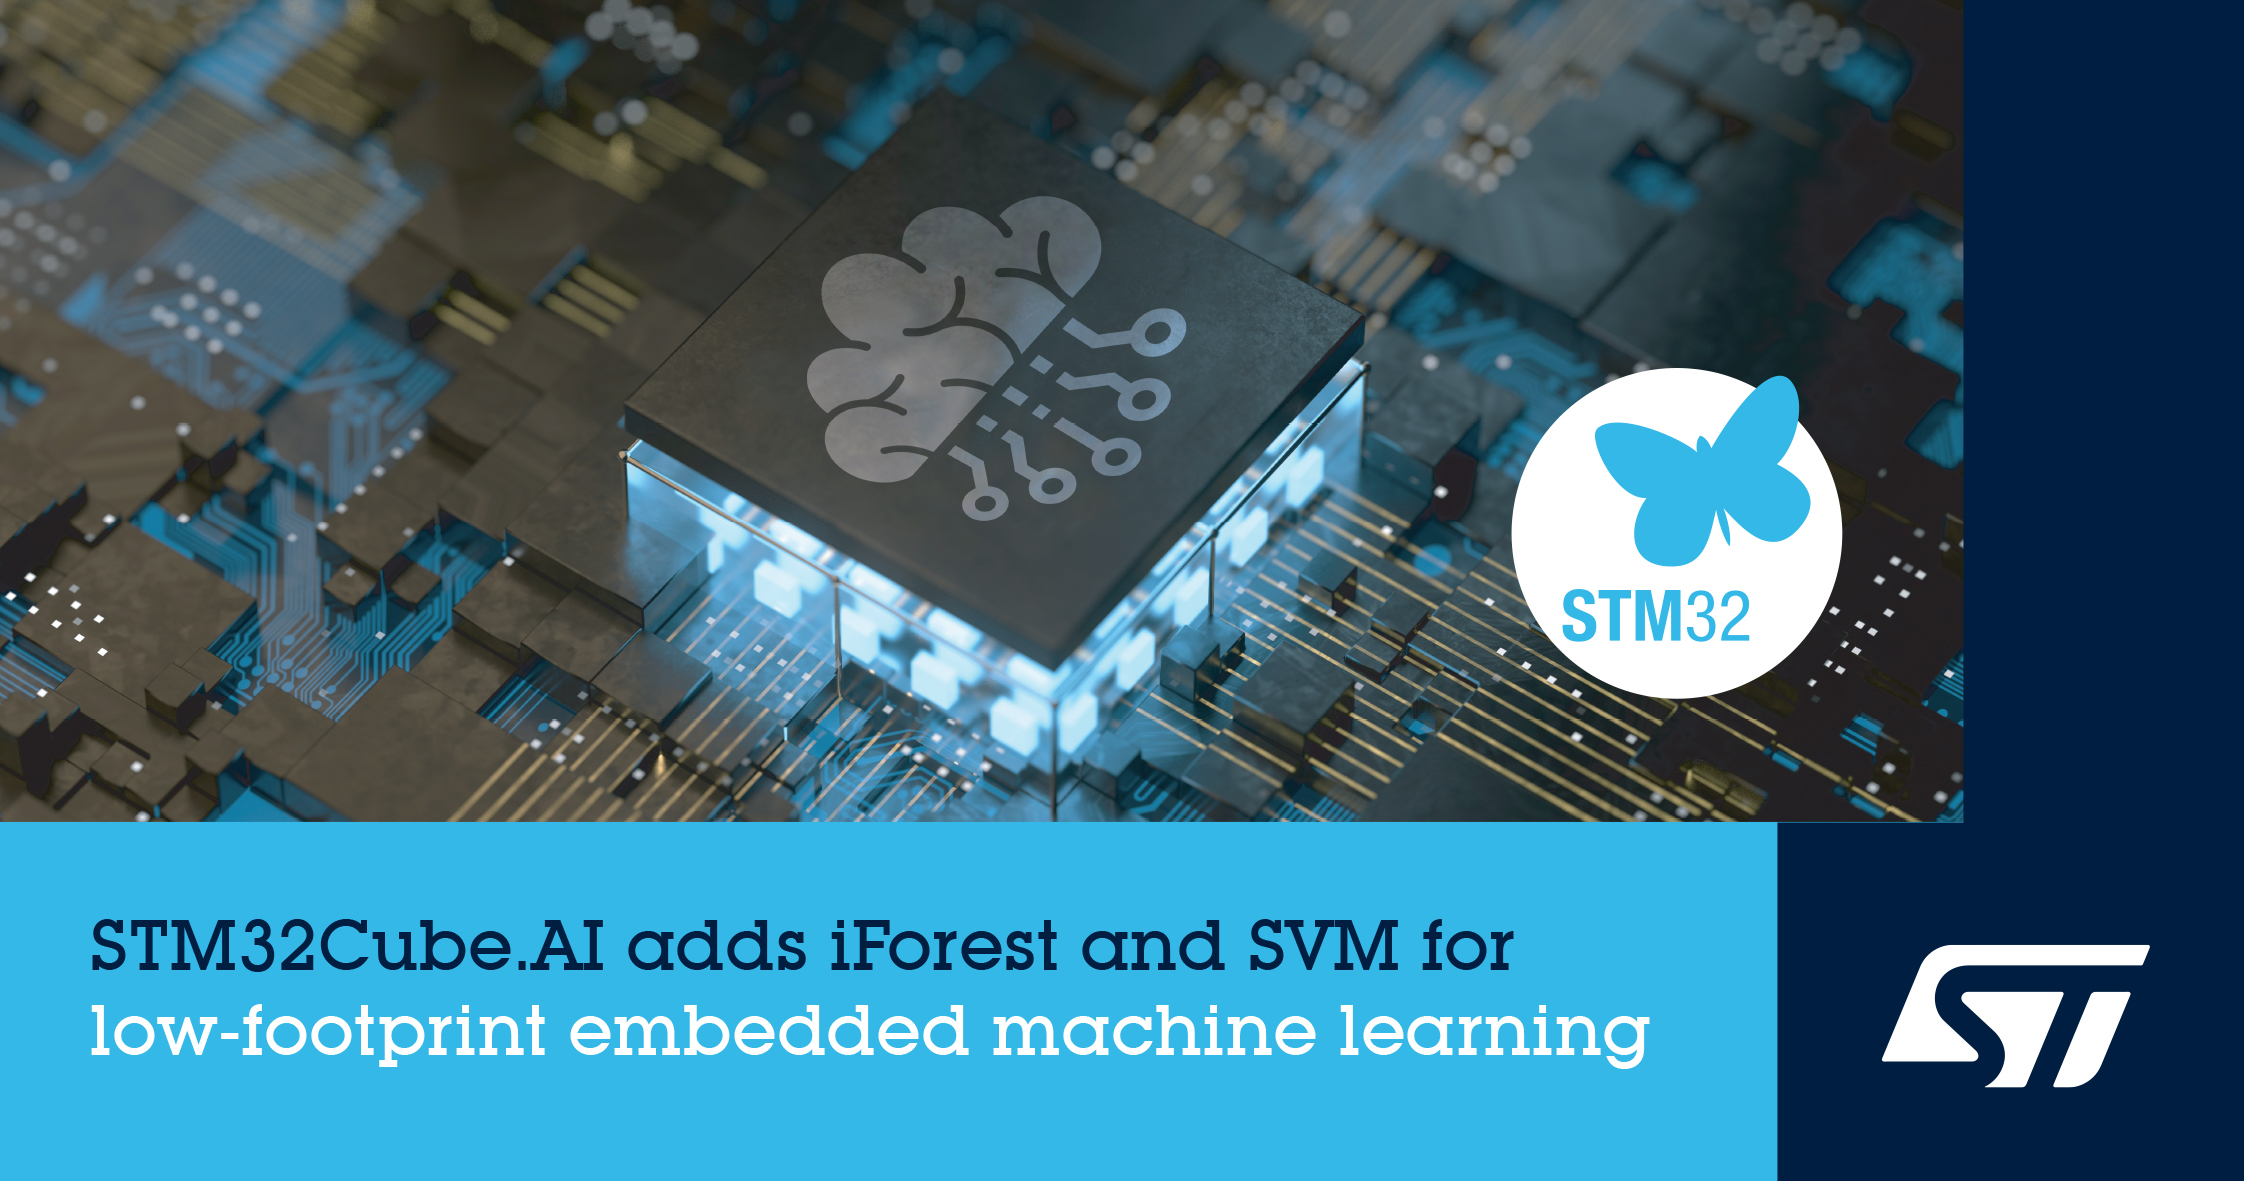 ST新闻稿2021年8月23日——意法半导体STM32Cube.AI生态系统加强对高效机器学习的支持.jpg